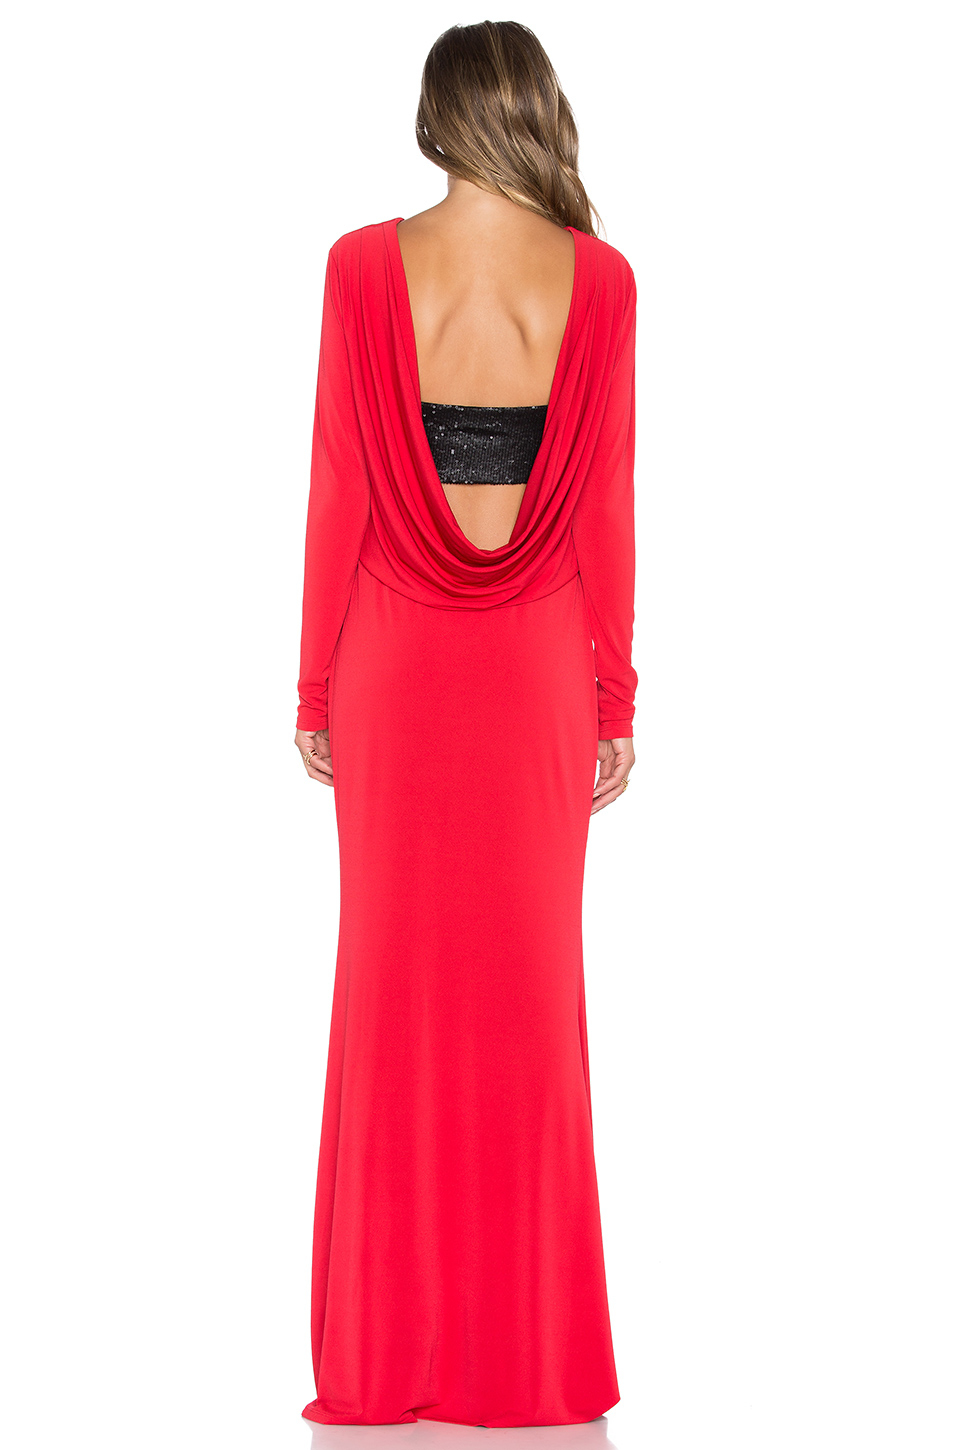 Rachel Zoe Maurie Maxi Dress in Red - Lyst